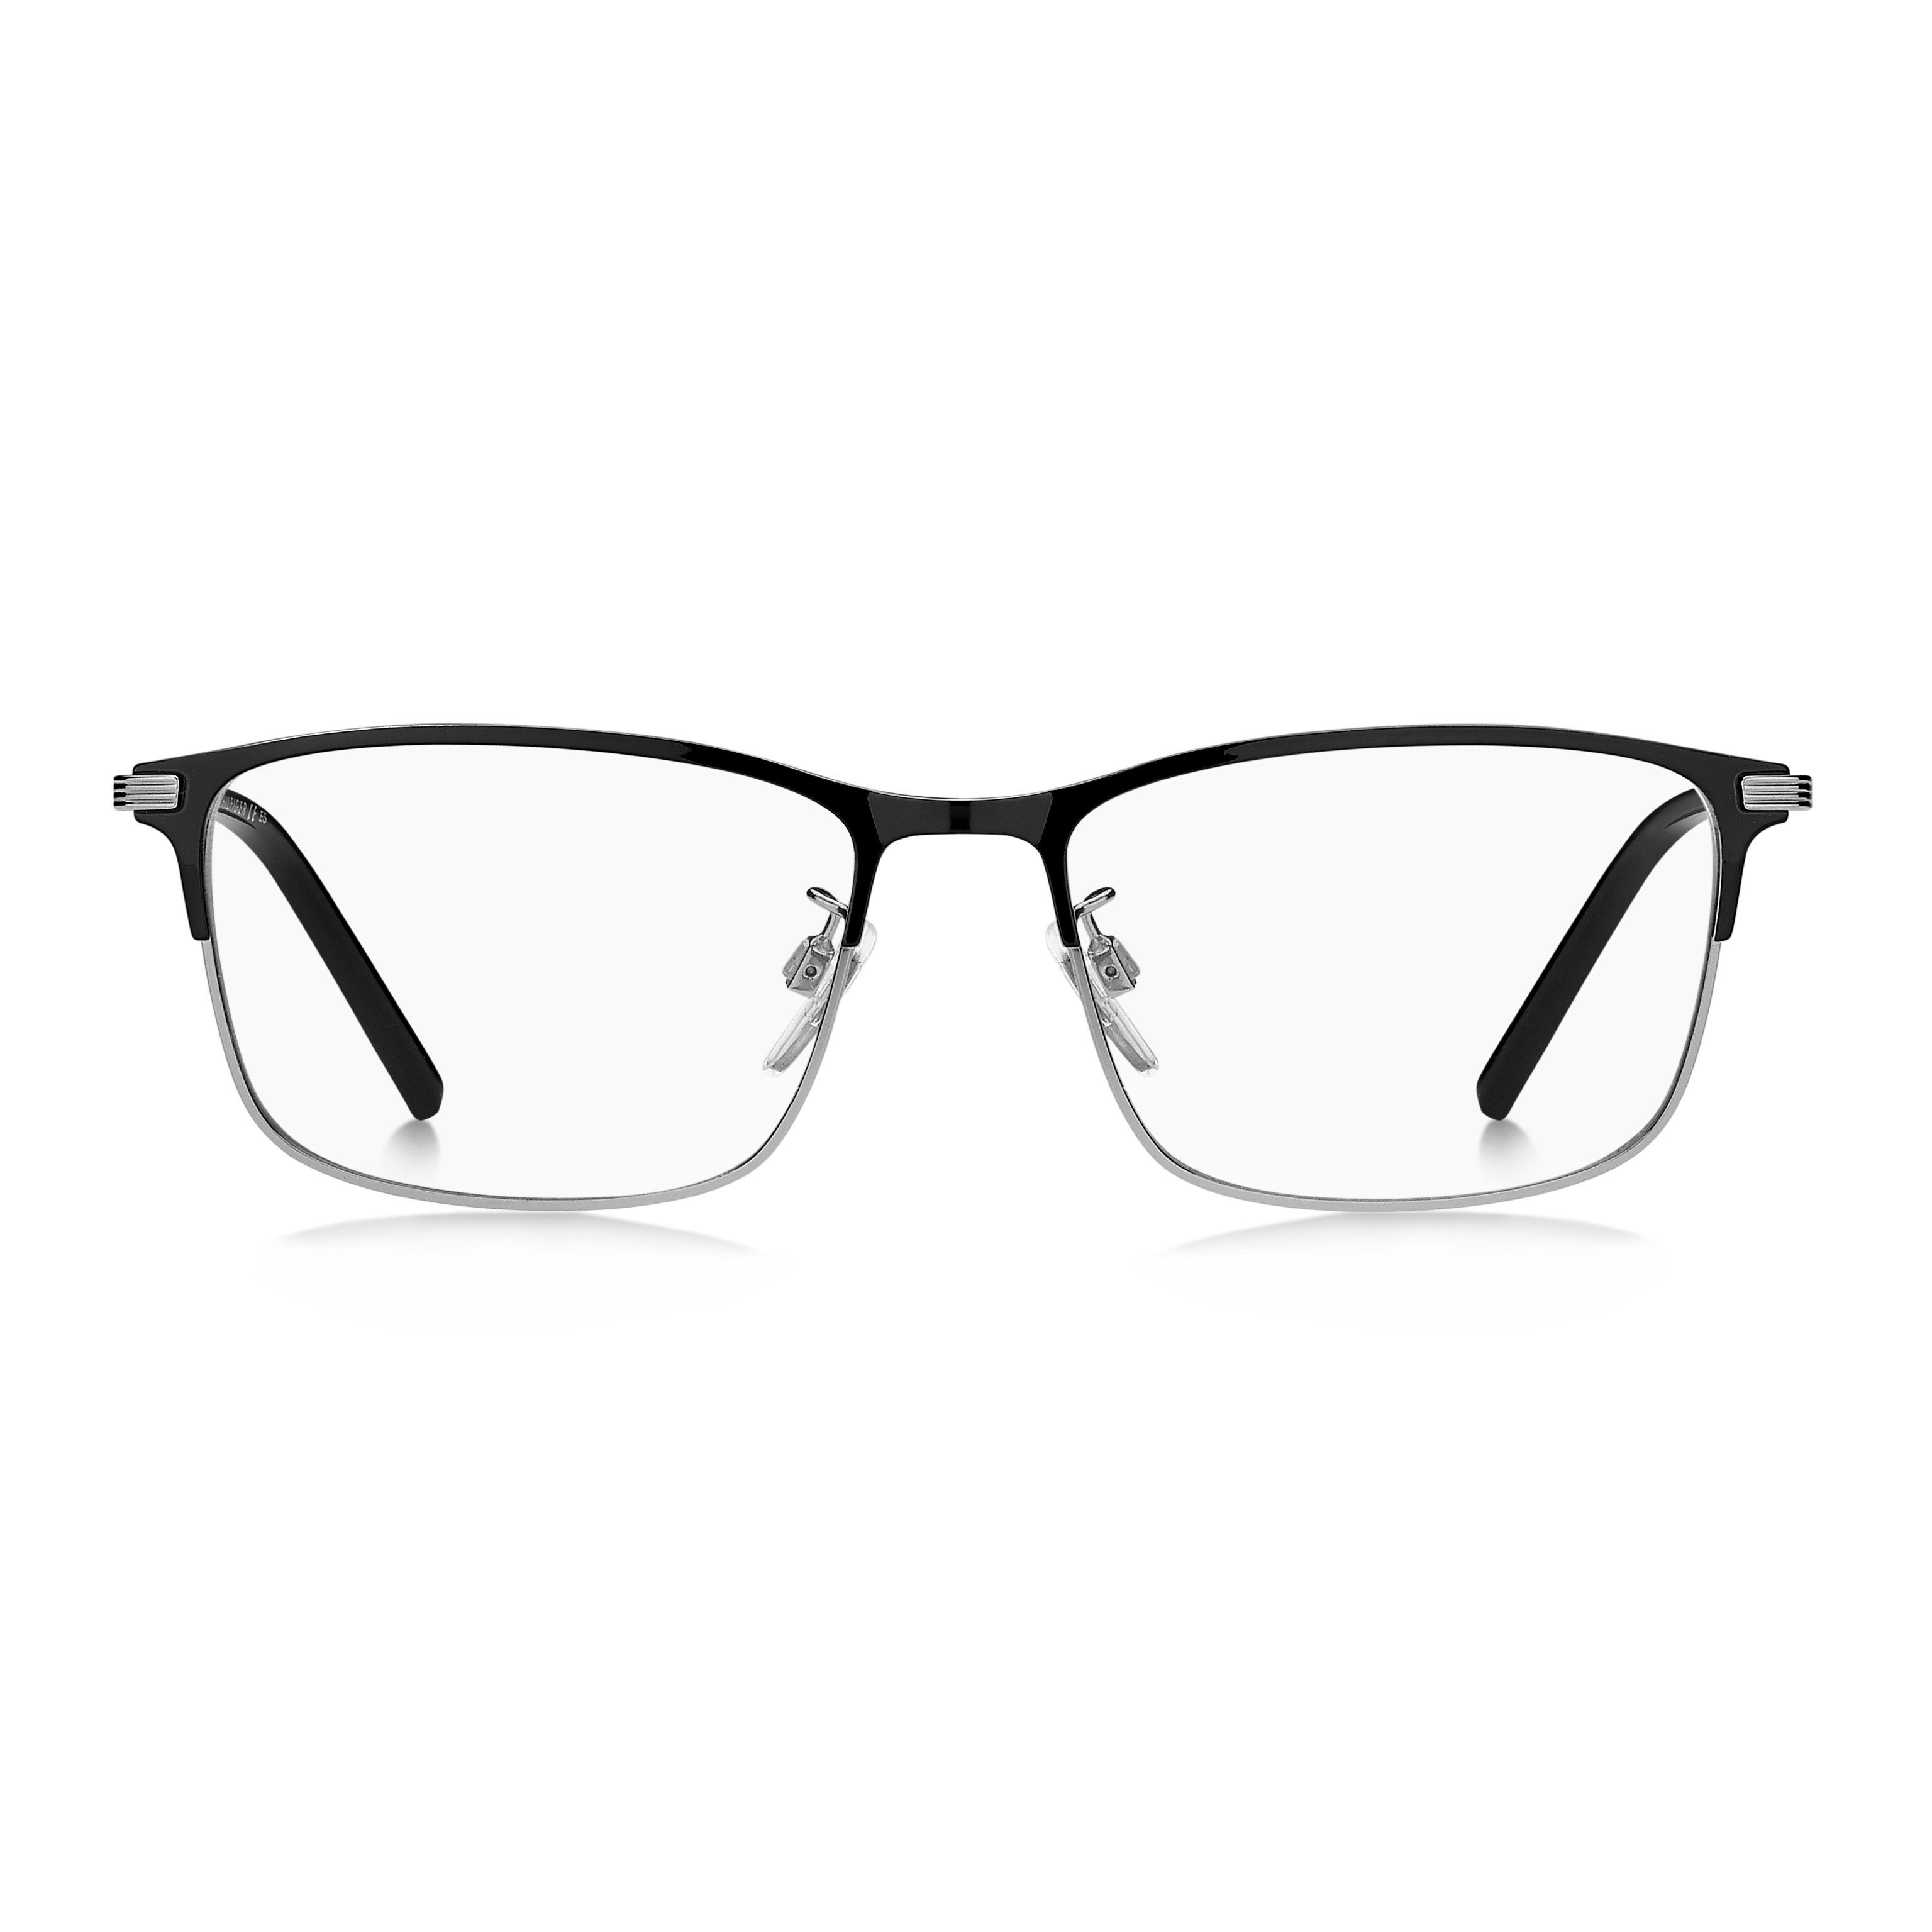 TH 2014 F Square Eyeglasses 284 - size 54